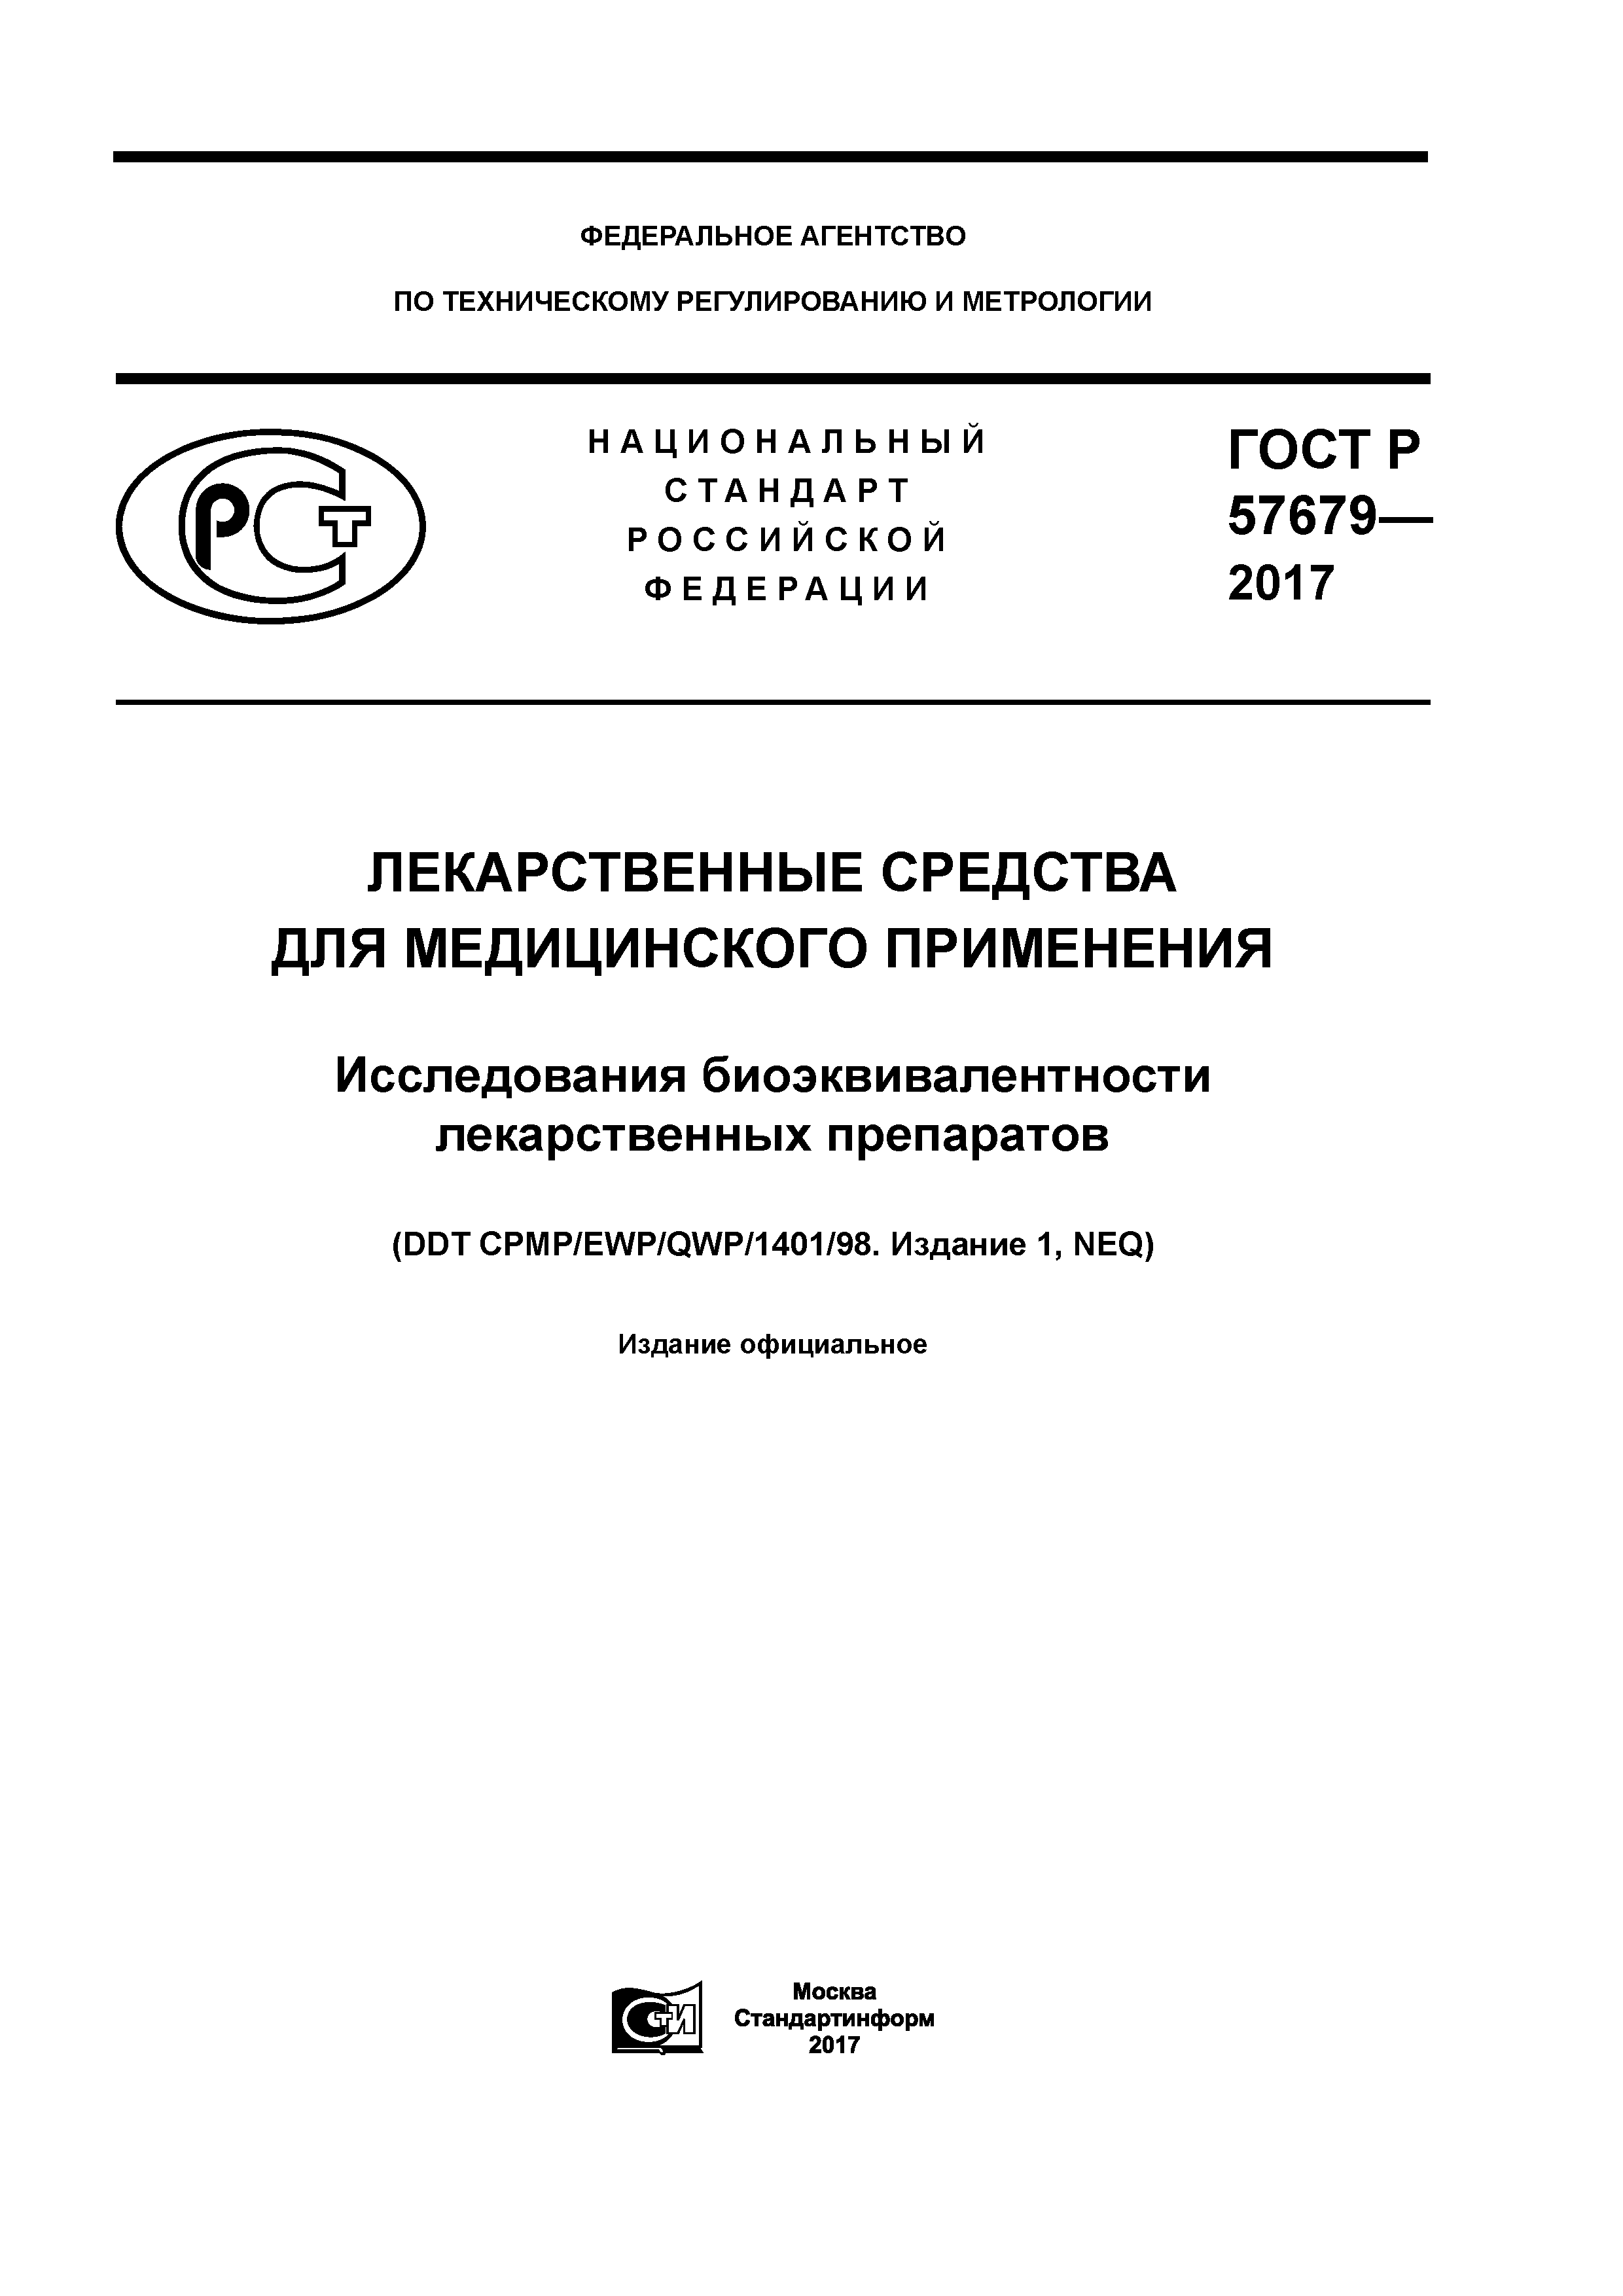 ГОСТ Р 57679-2017